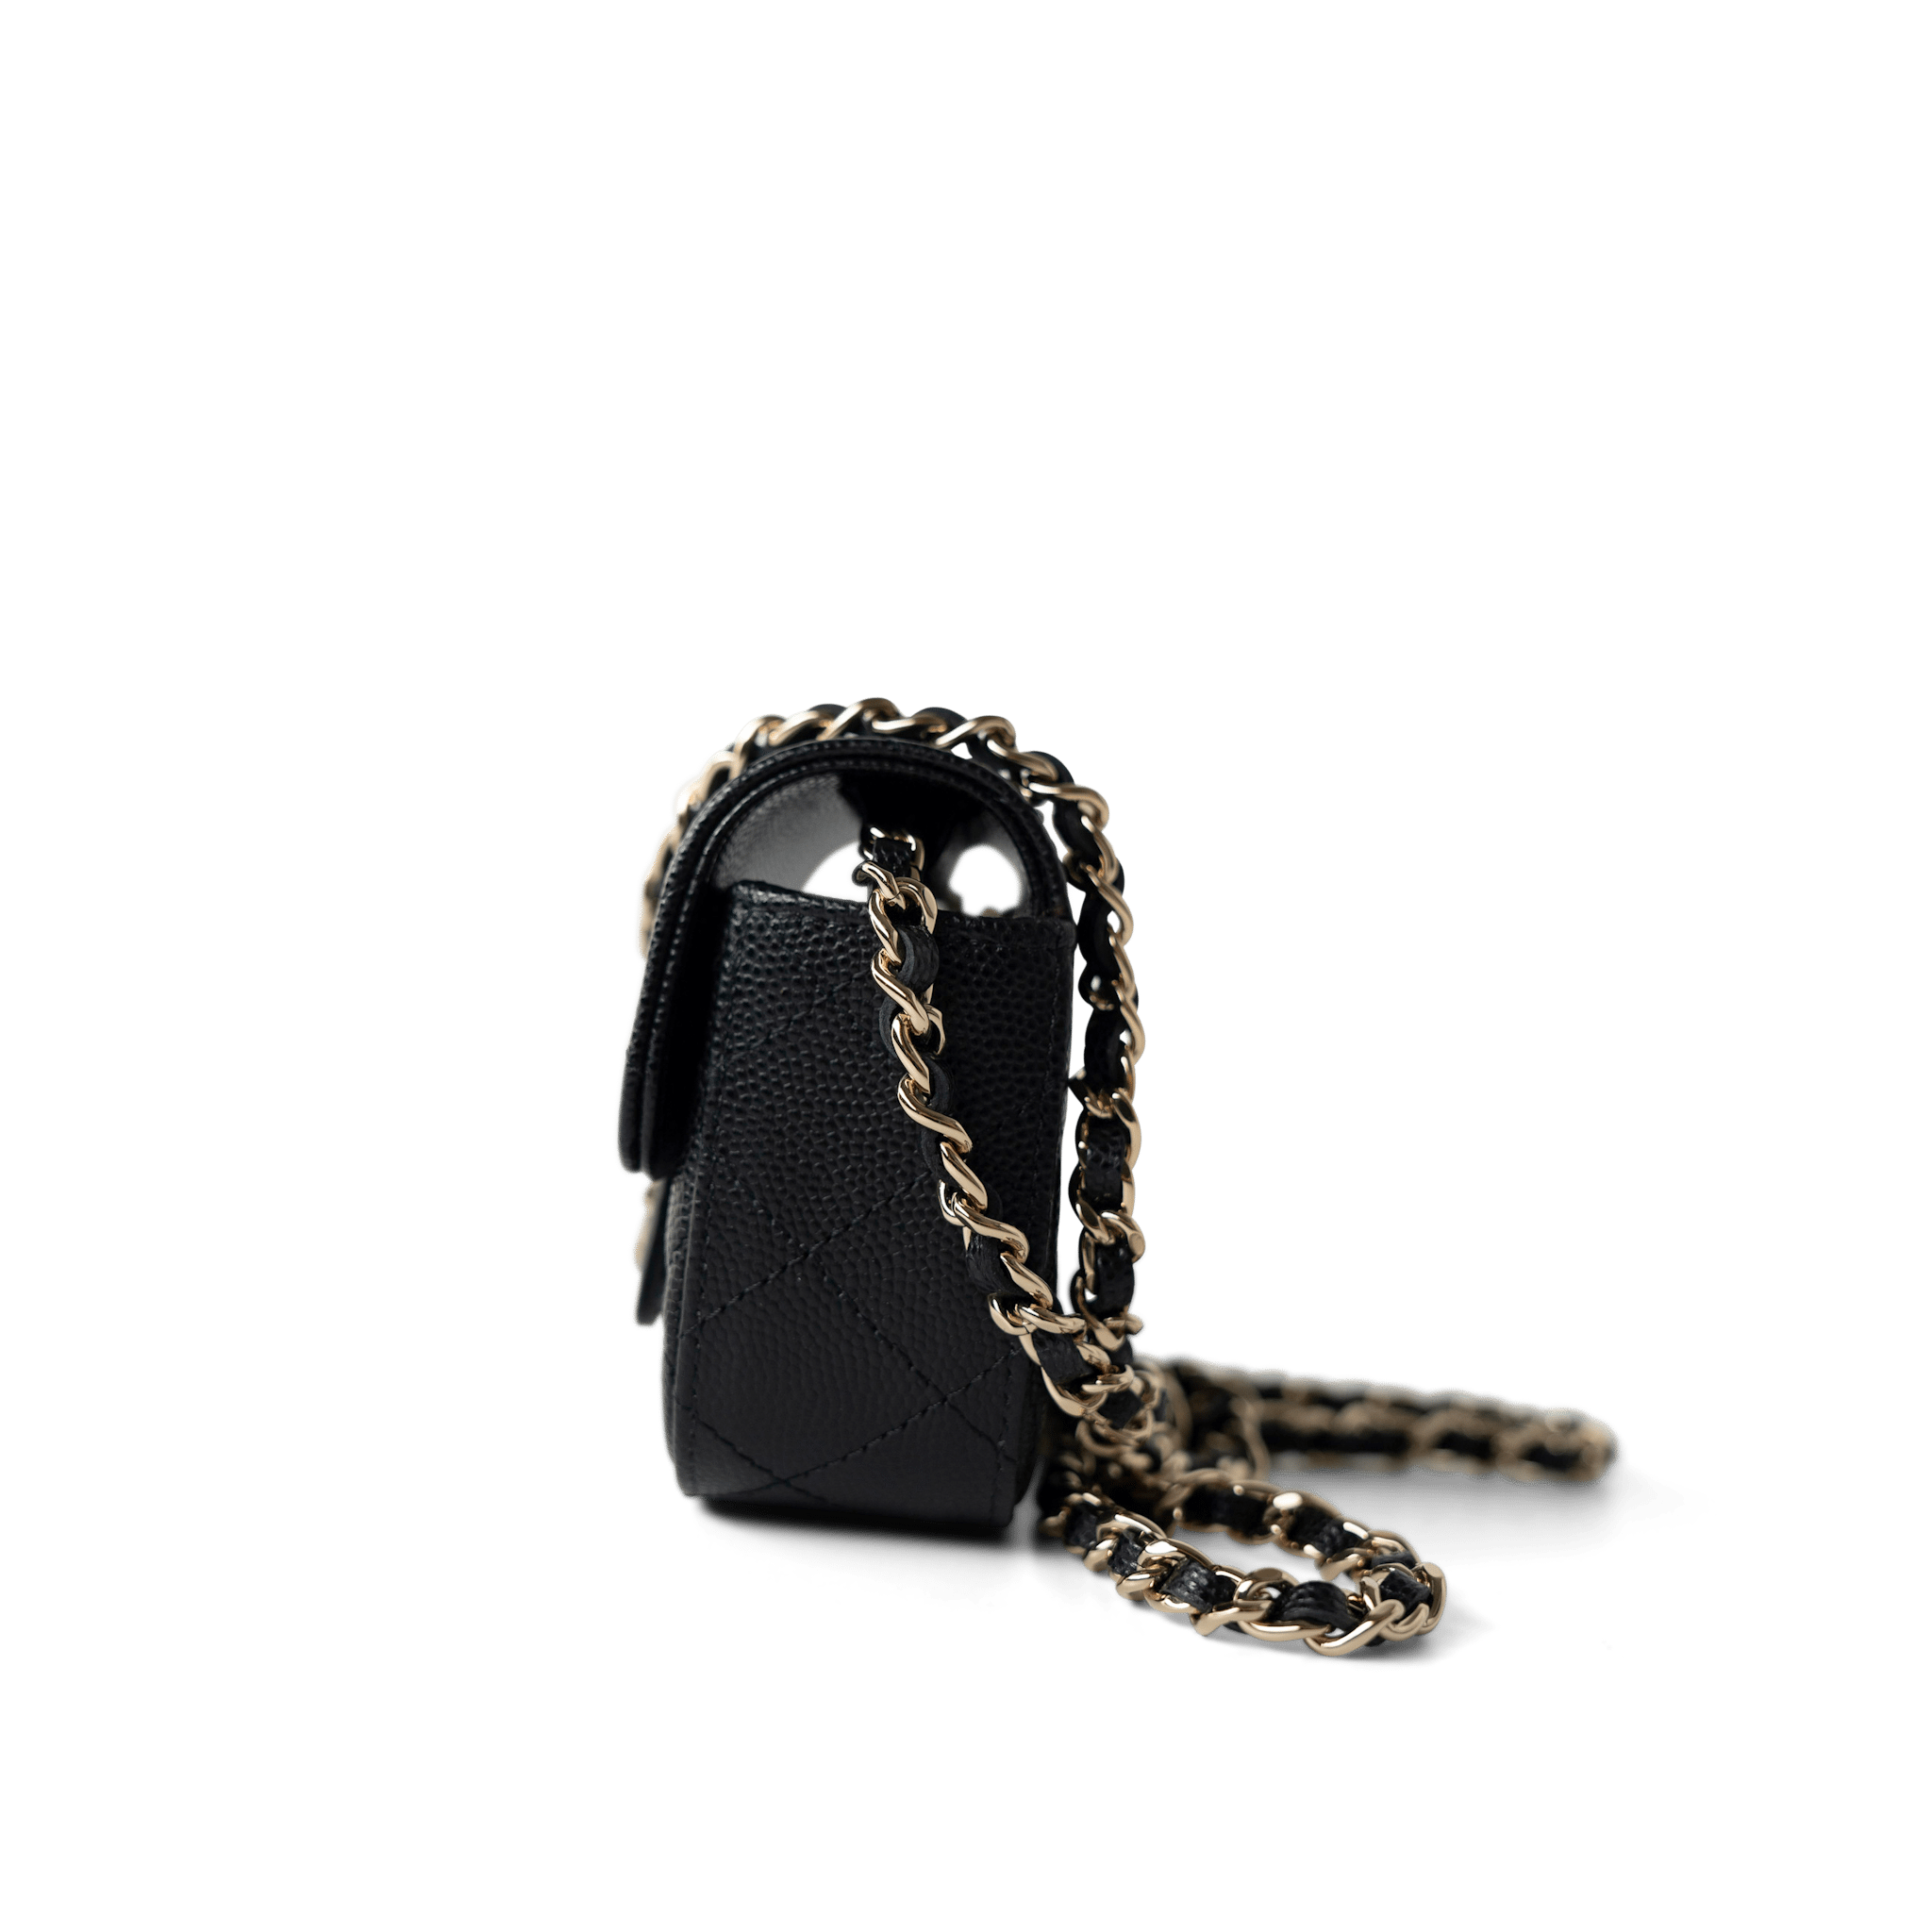 CHANEL Handbag Black 22C Mini Vanity Caviar Quilted Black (micro size) - Redeluxe